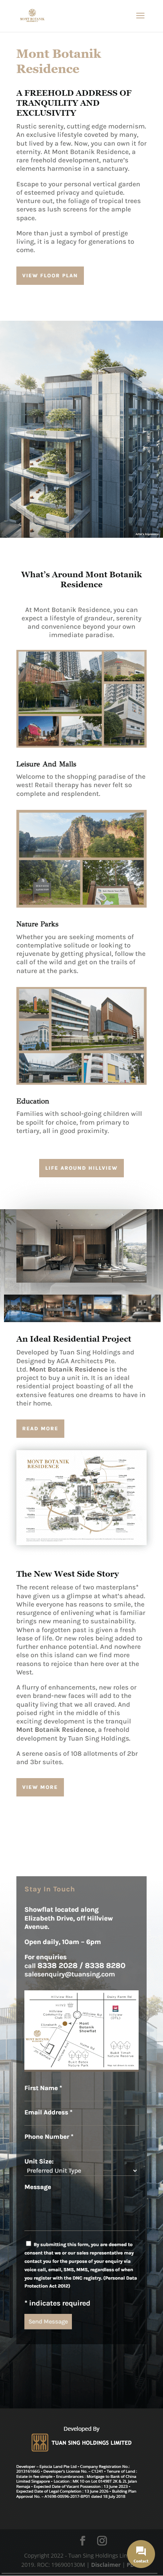 Web Design Singapore | Singapore Website Design - Tuan Sing Holdings Ltd 4 |